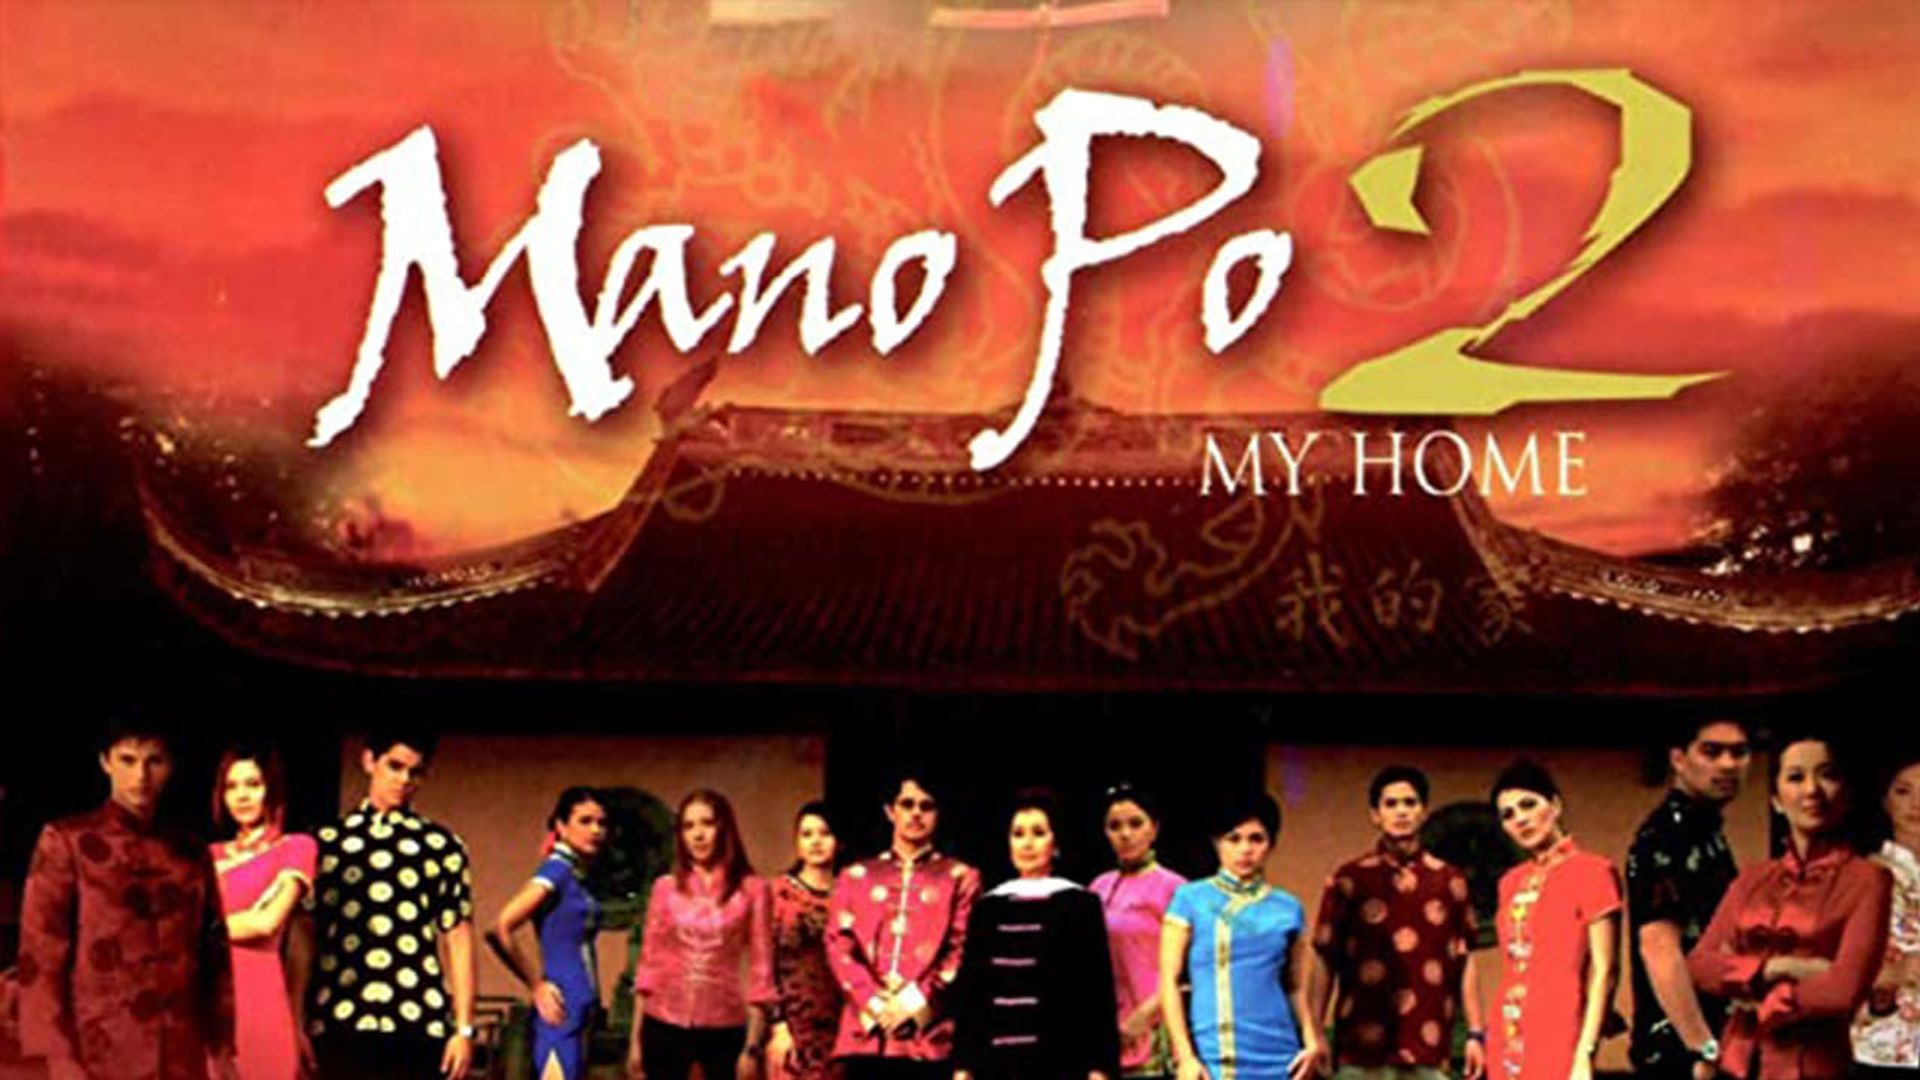 Mano po 2: My home background